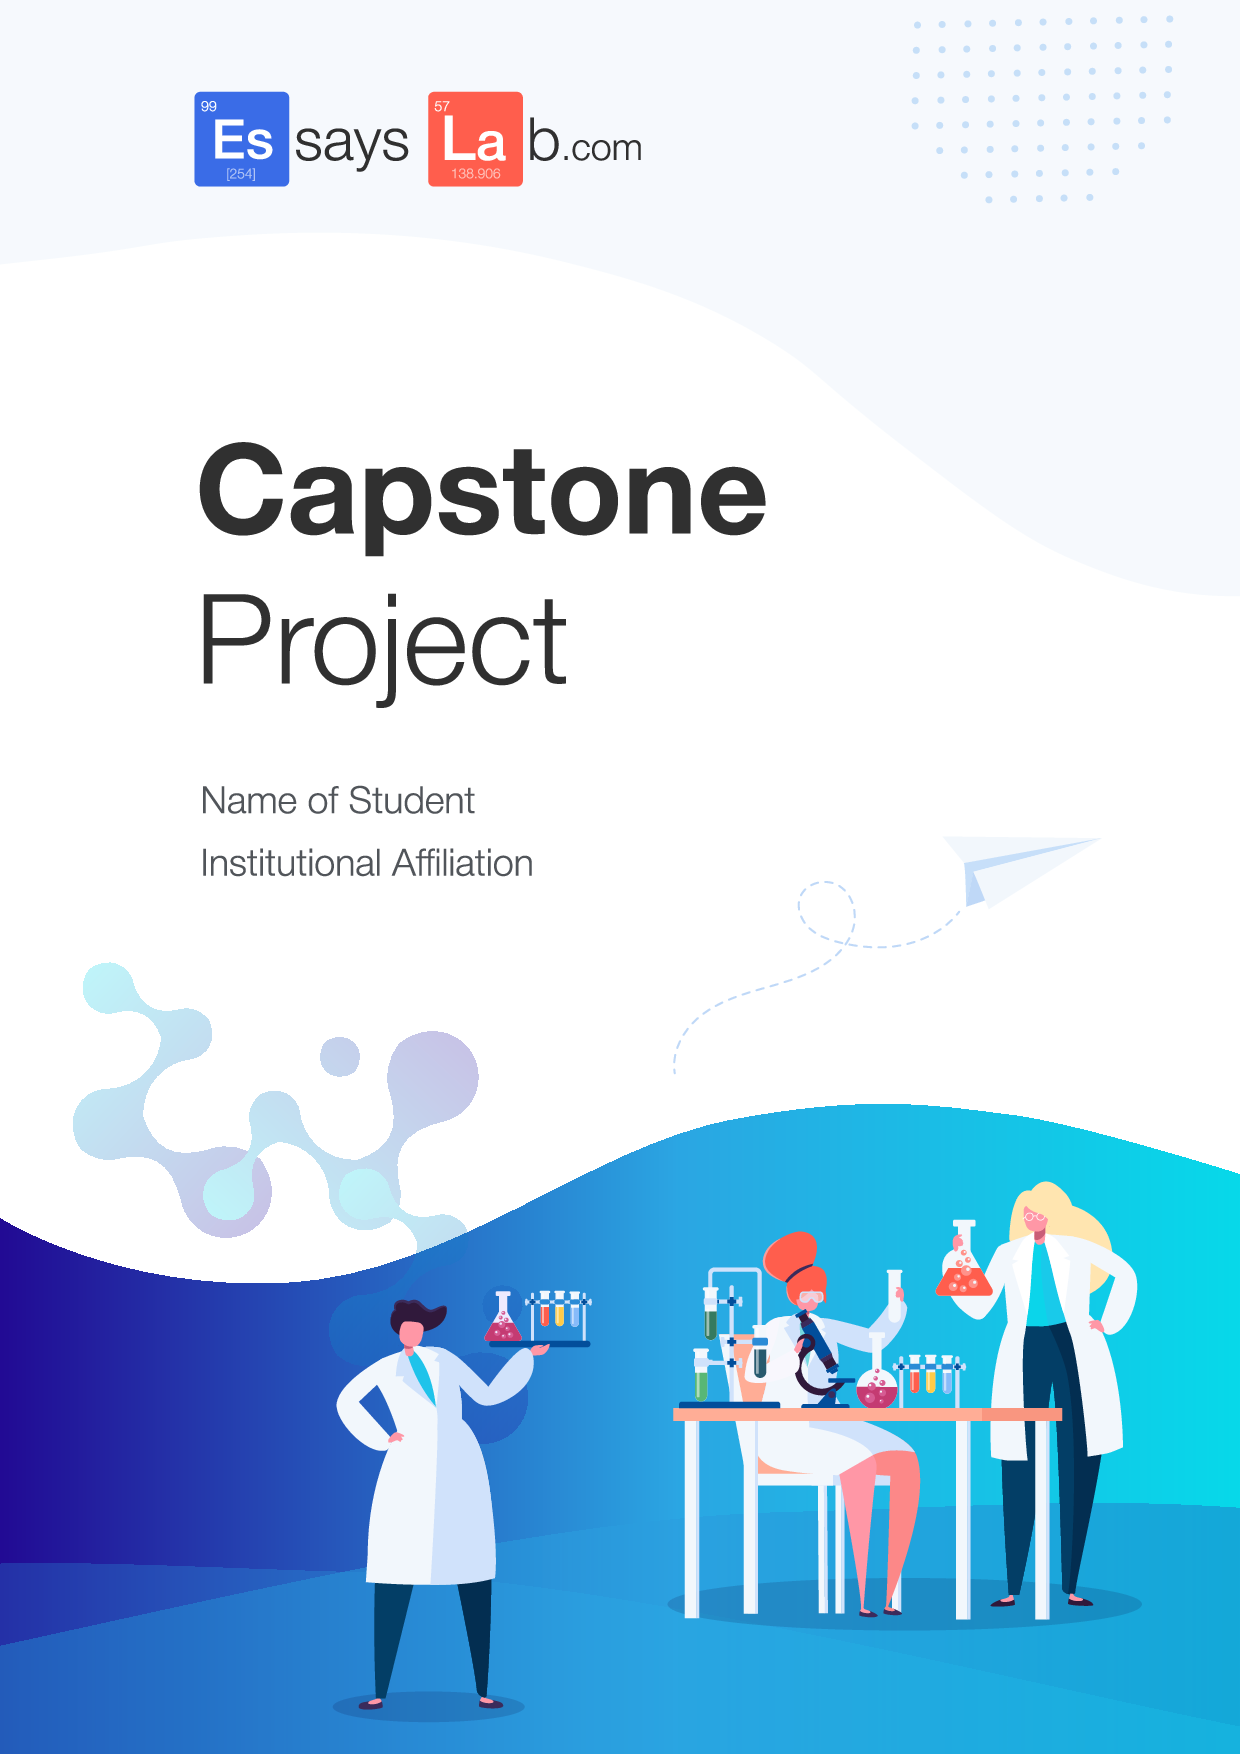 post test capstone project cultural relevance quizlet